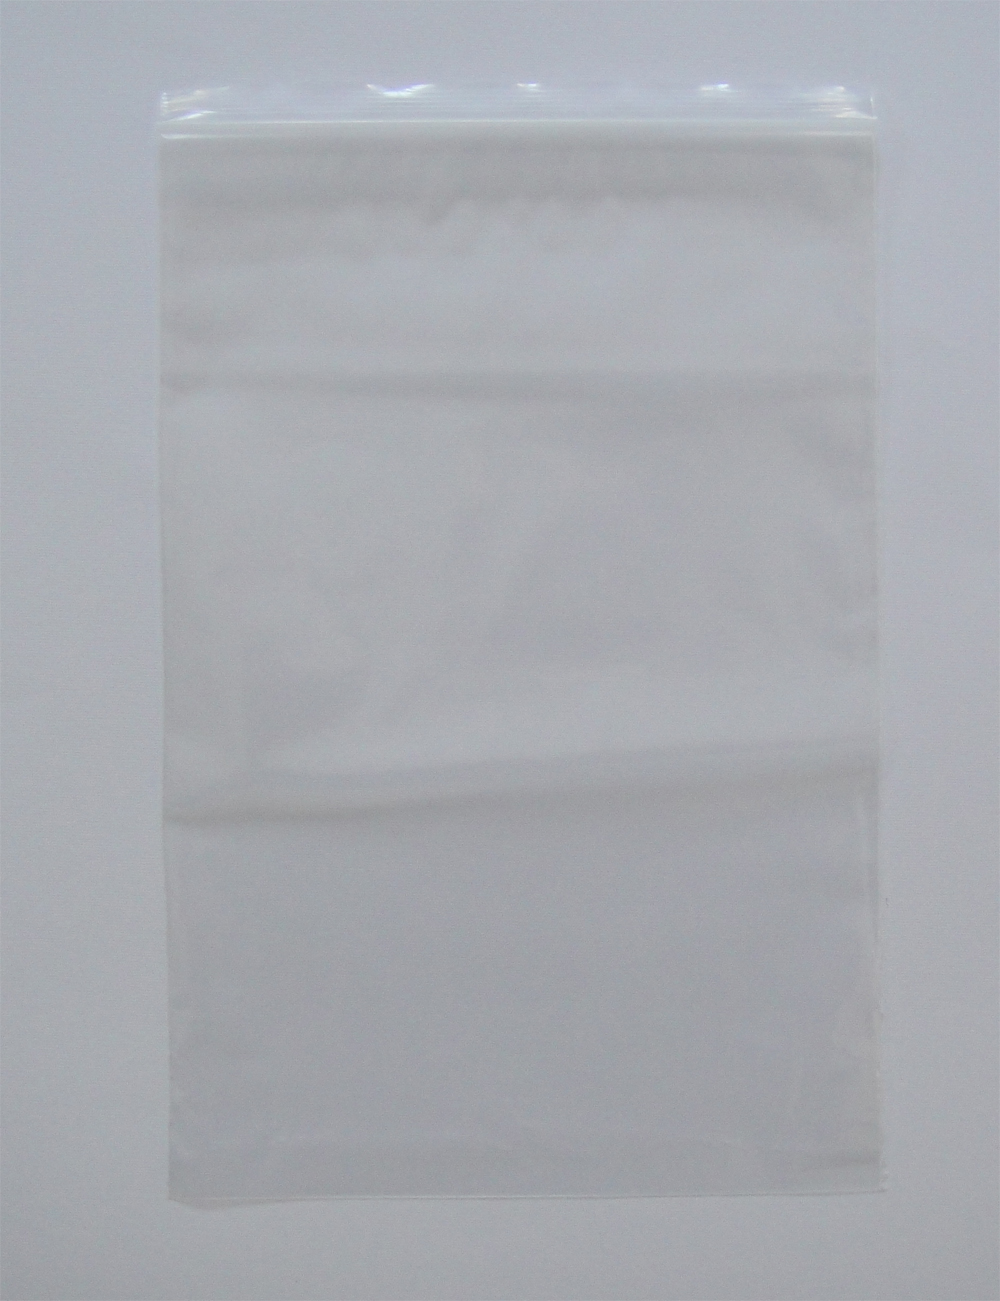 GL2 1000 x Grip Seal Resealable Poly Bags 2.25" x 3" 